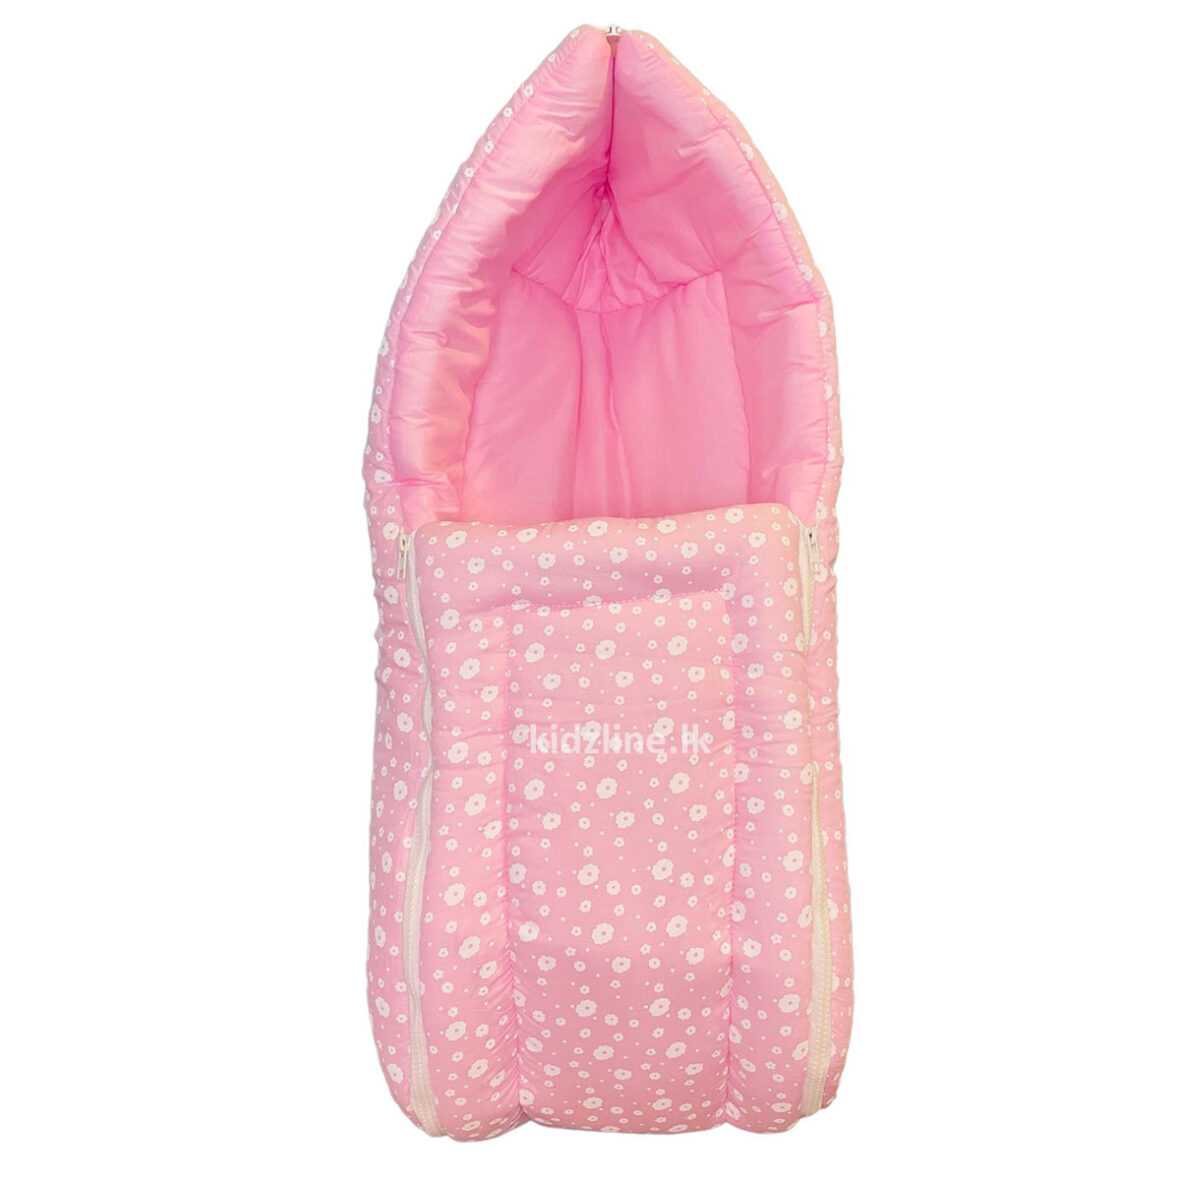 100% Cotton Material Baby Printed Sleeping Bag ( Pink )